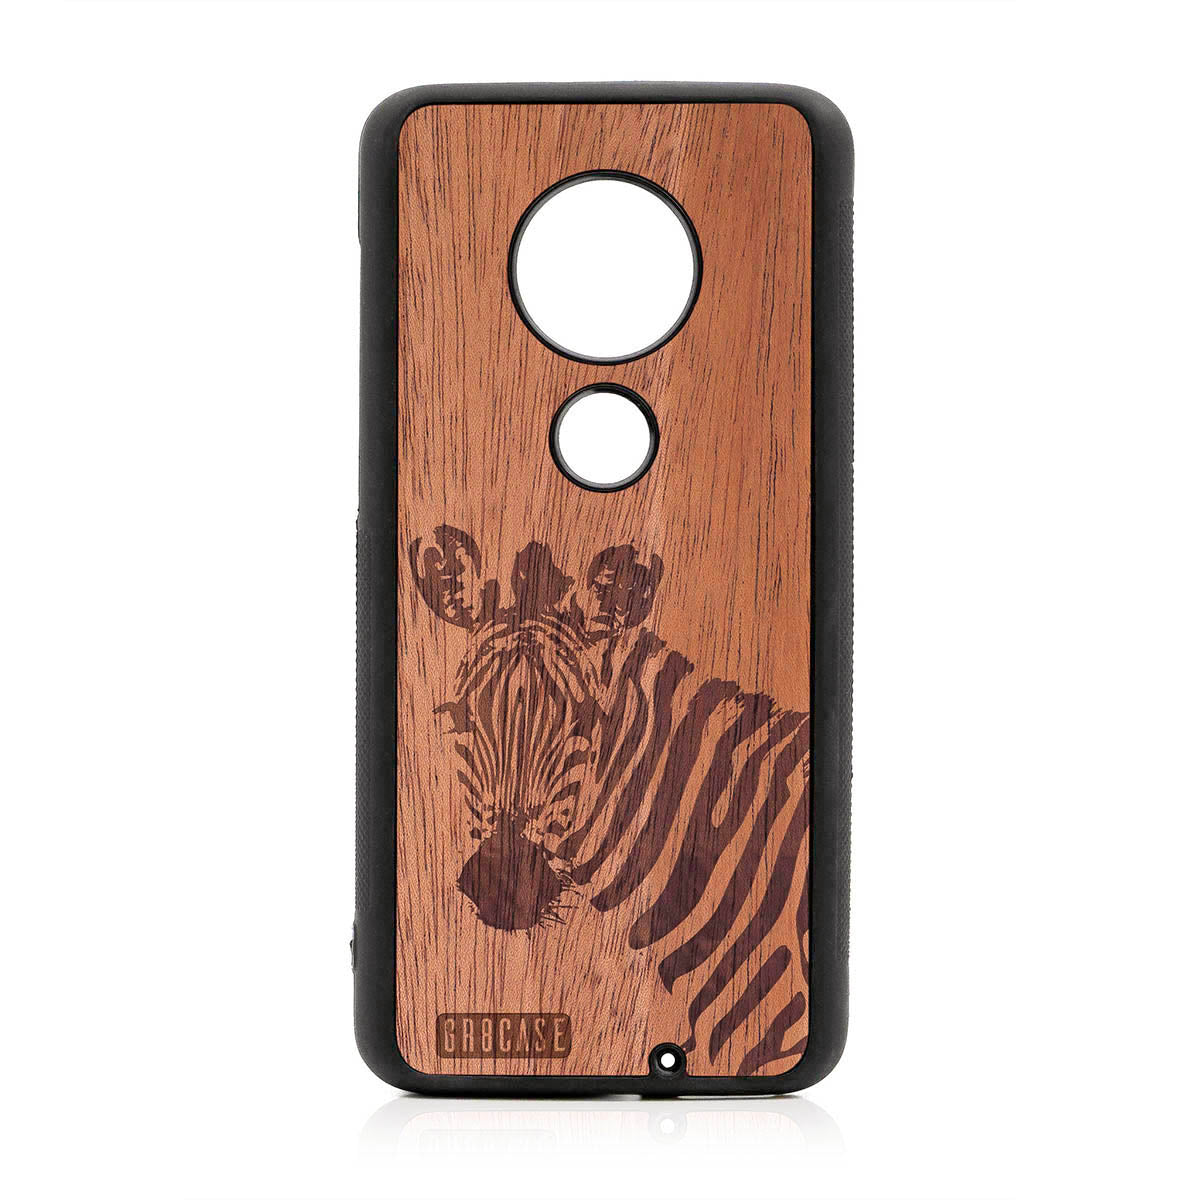 Lookout Zebra Design Wood Case For Moto G7 Plus